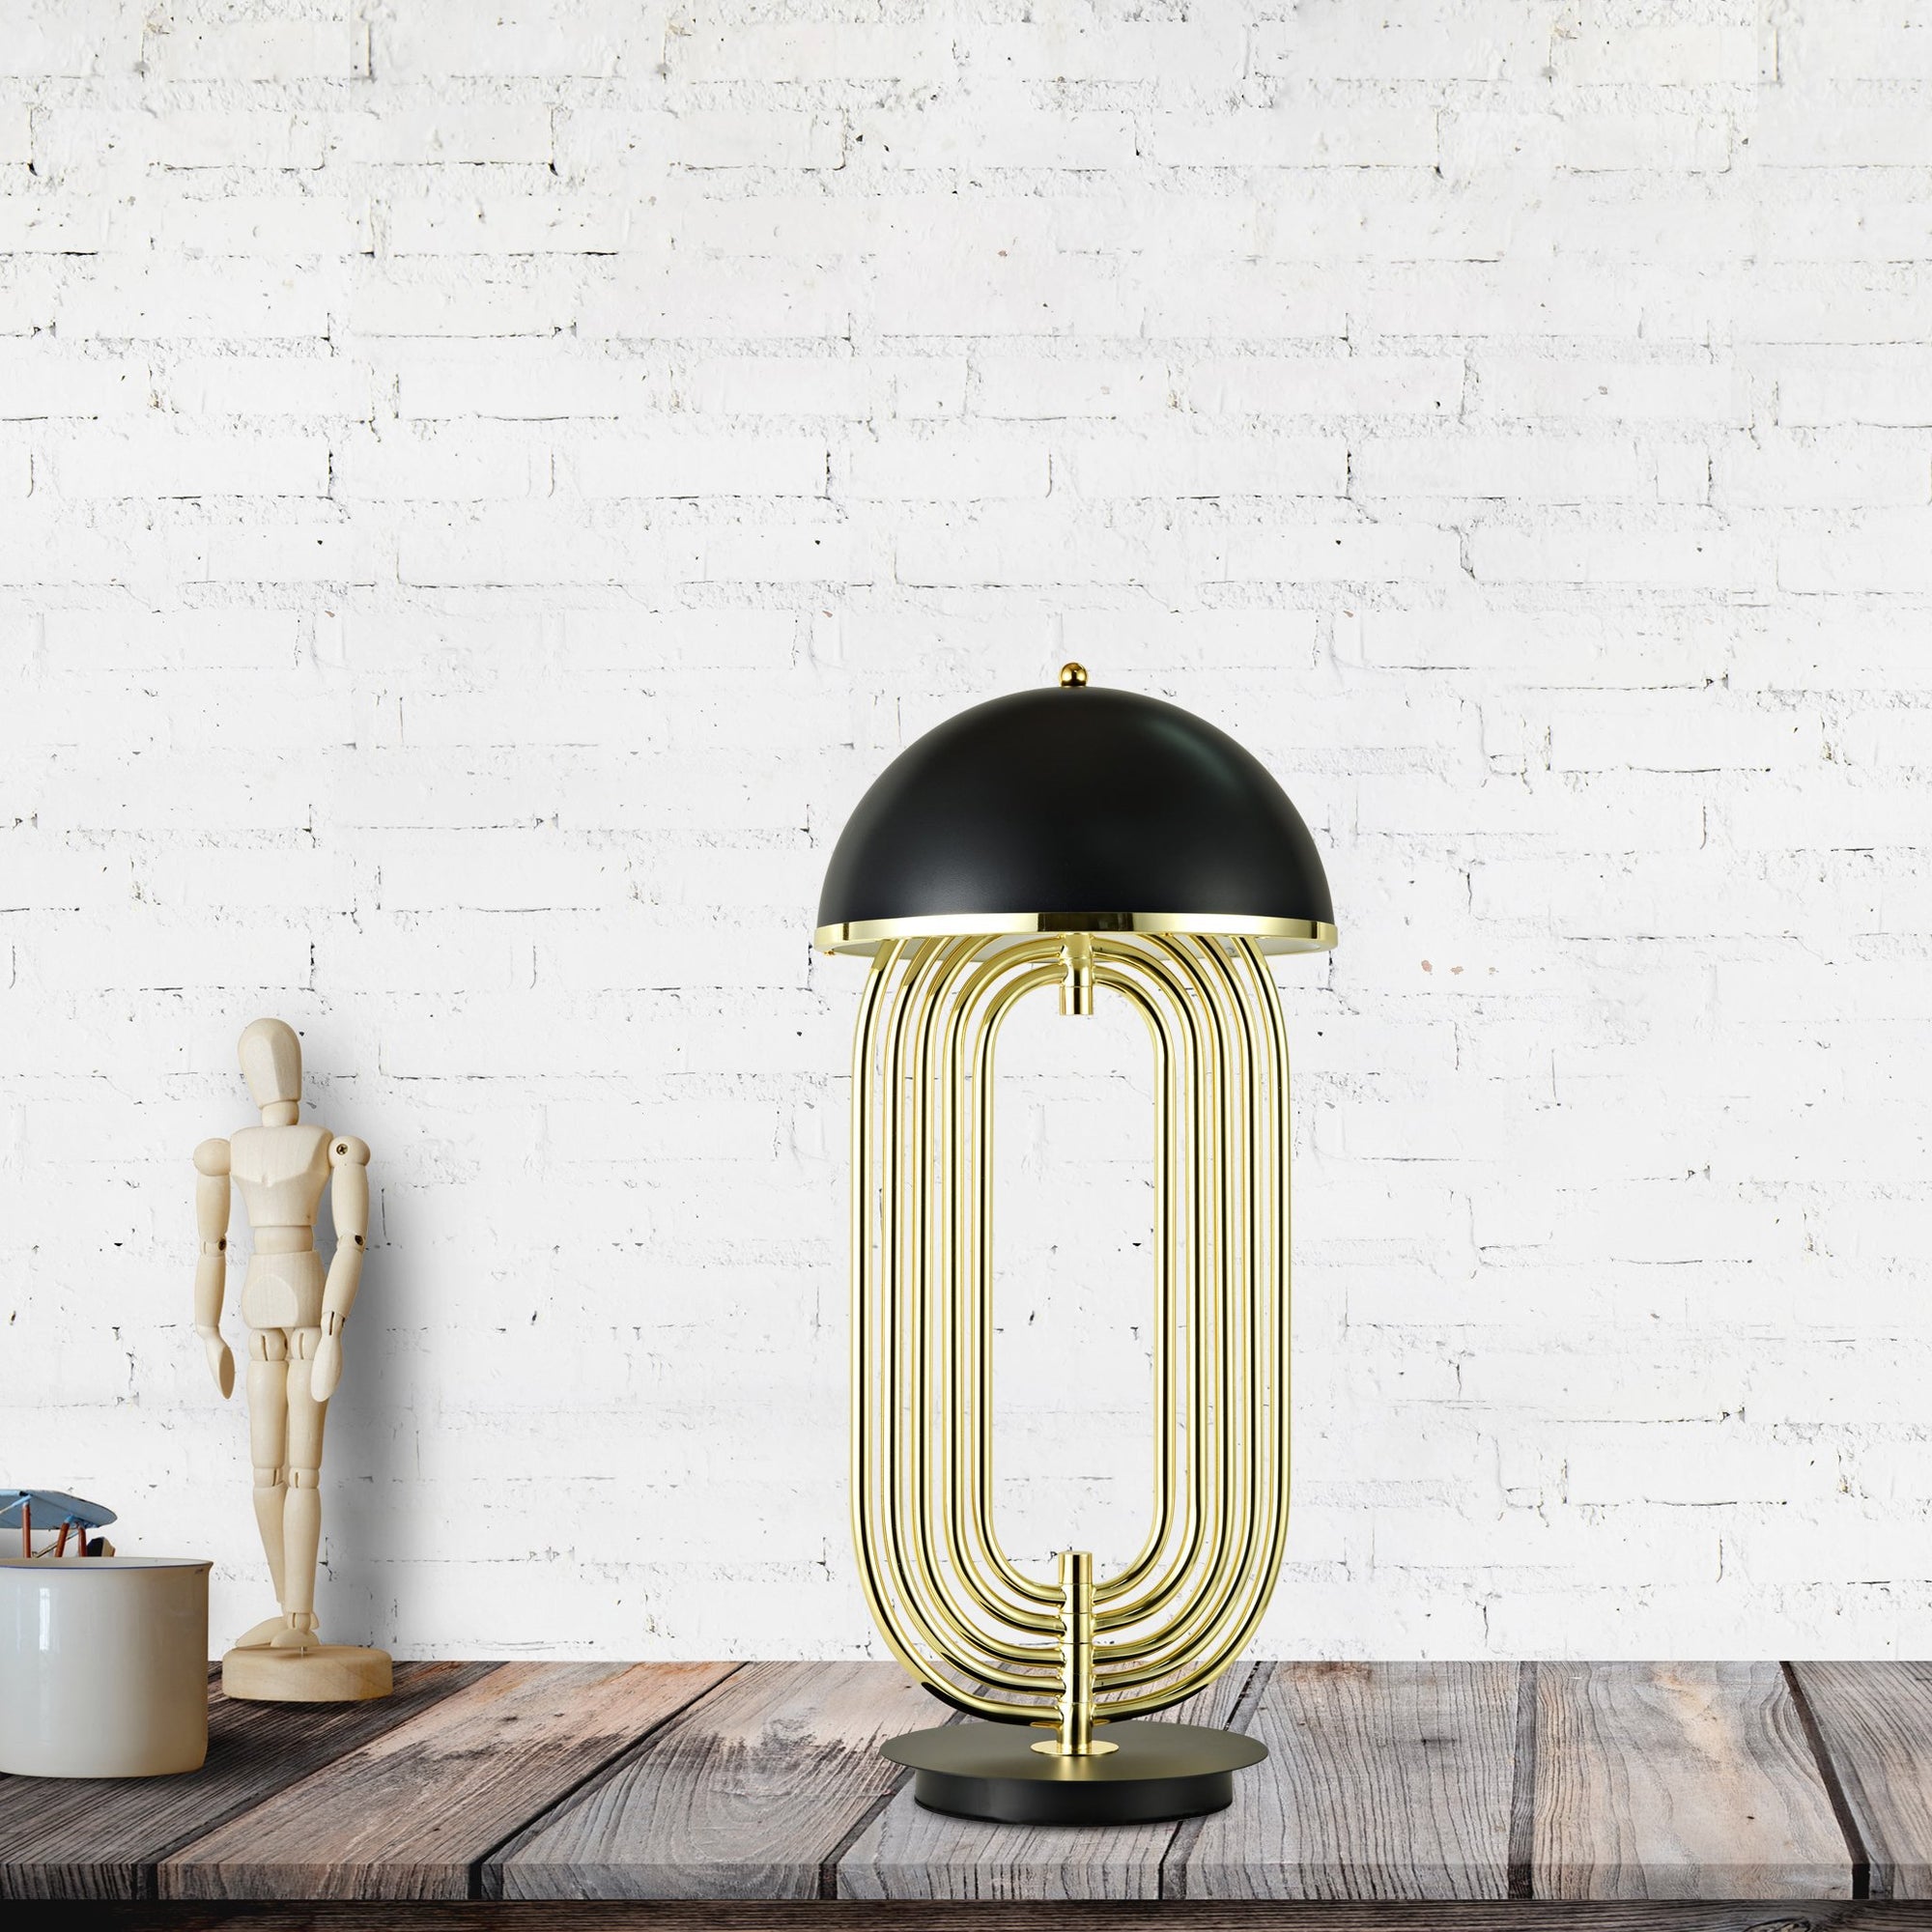 Buy Brave Table Lamp online